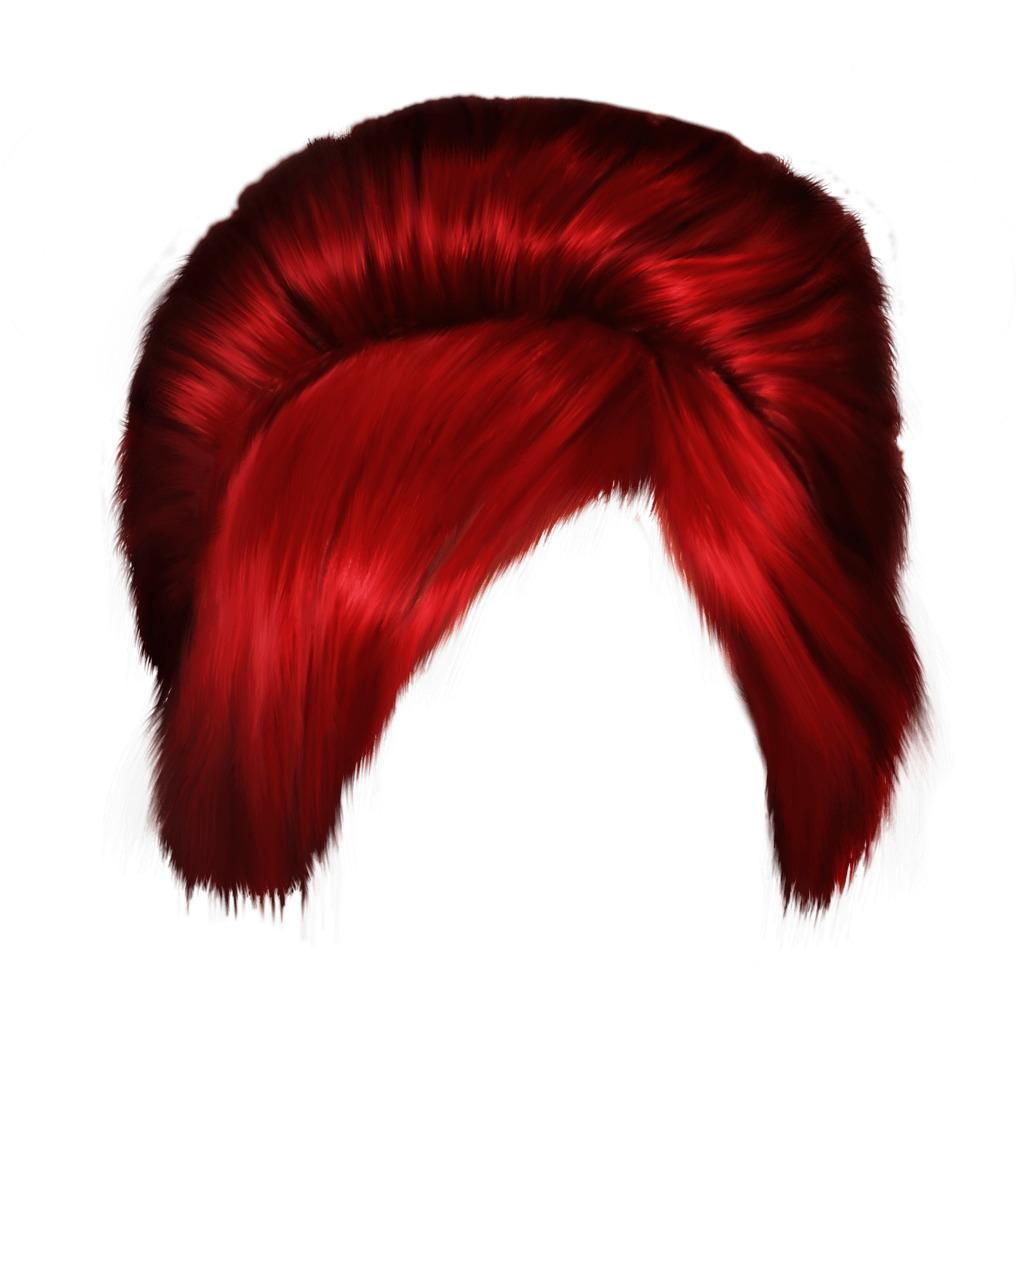 Short Red Women Hair png transparent